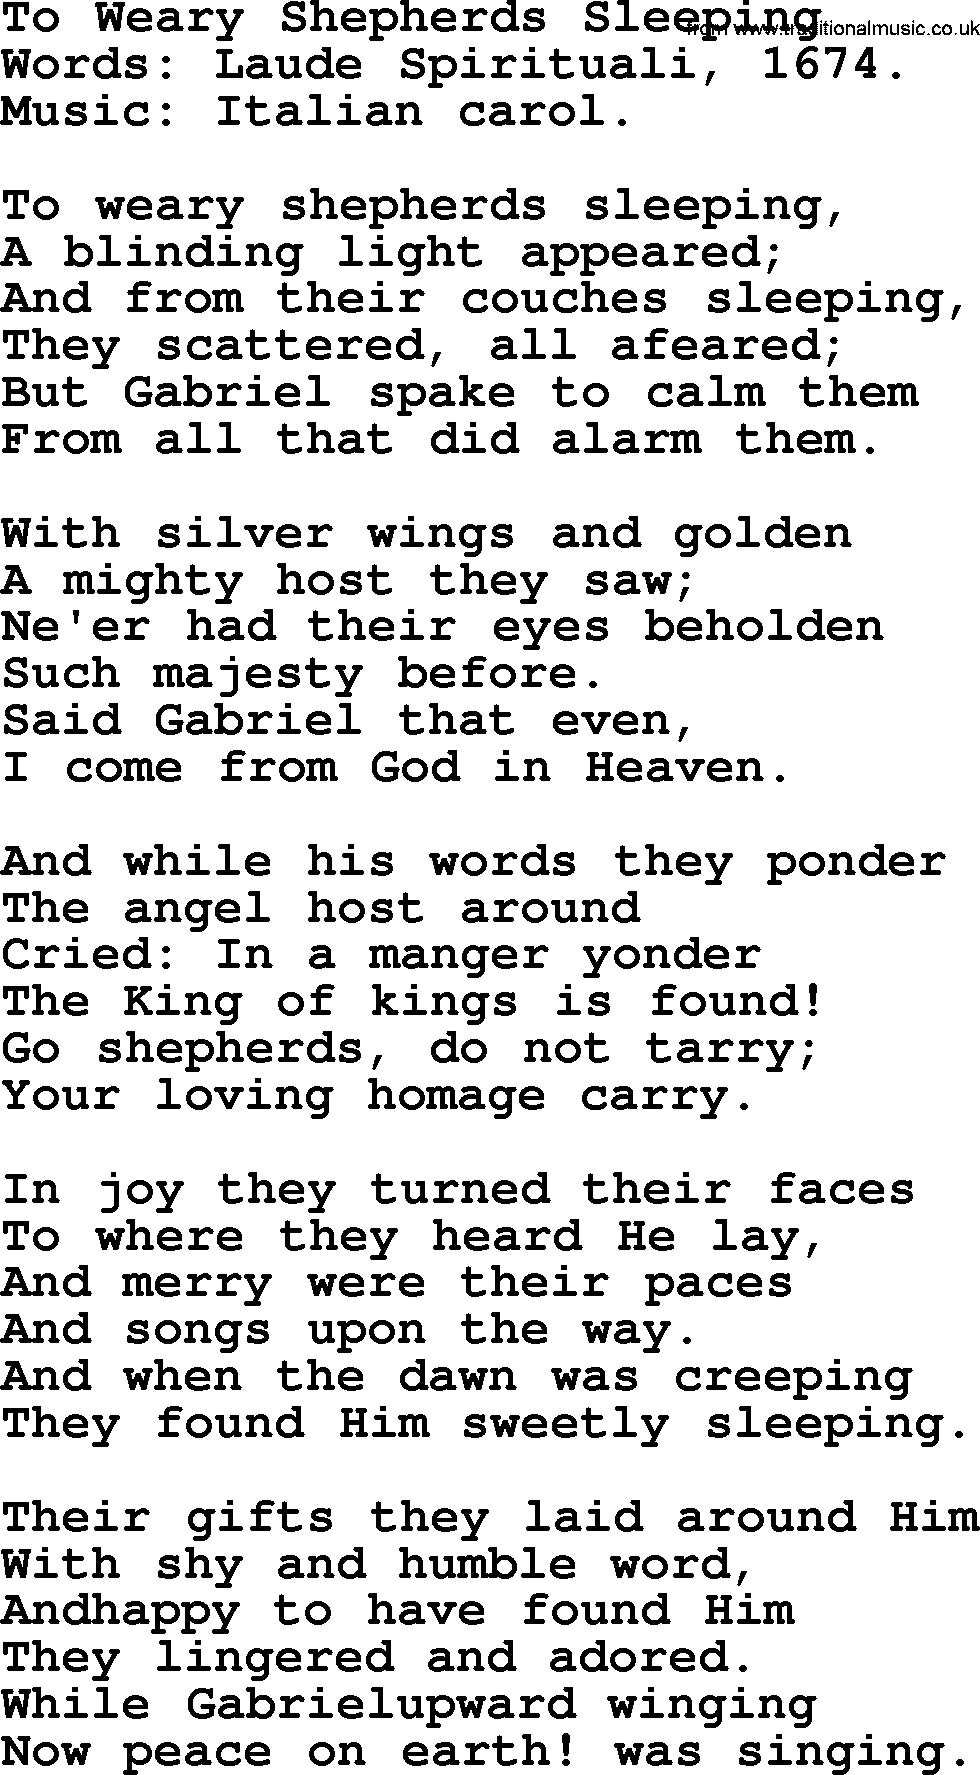 Christmas Hymns, Carols and Songs, title: To Weary Shepherds Sleeping, lyrics with PDF